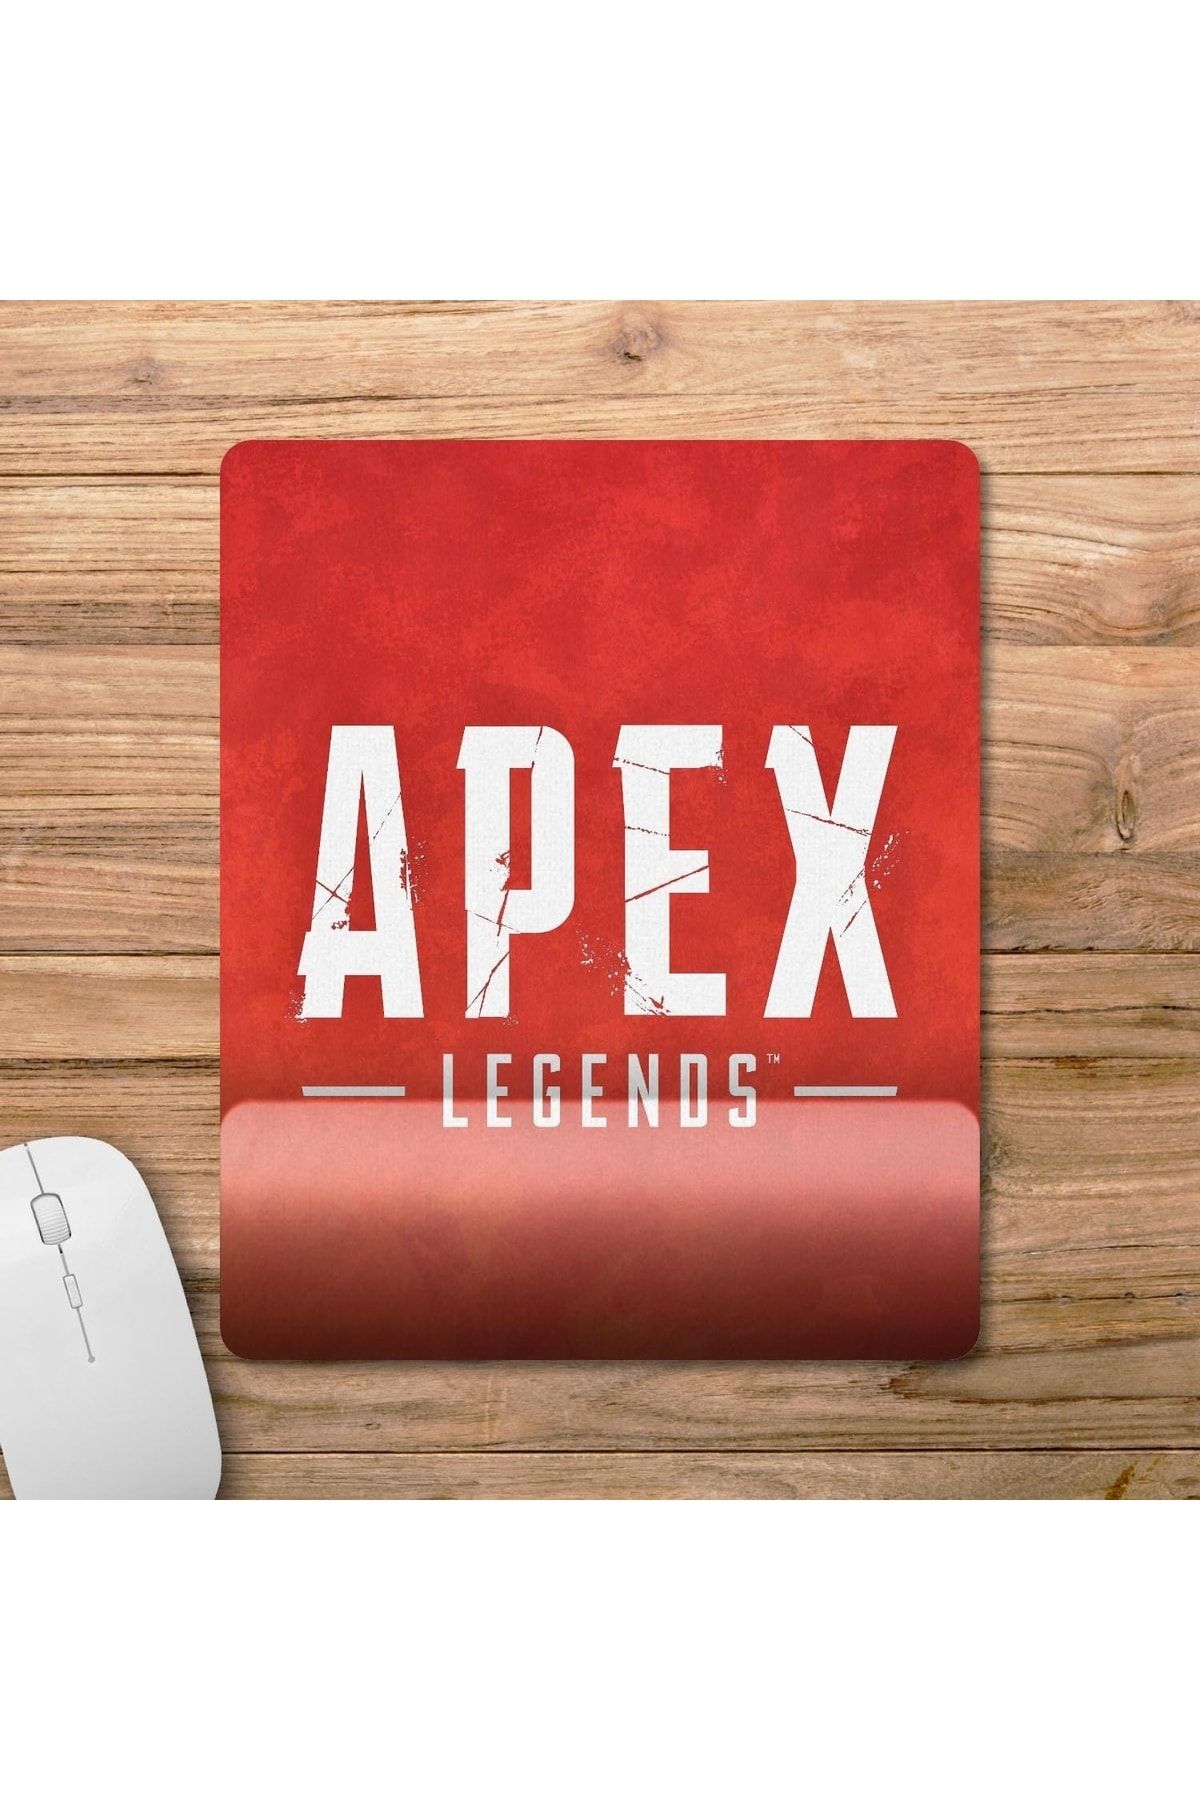 Pixxa Apex Legends Bilek Destekli Mousepad Model - 3